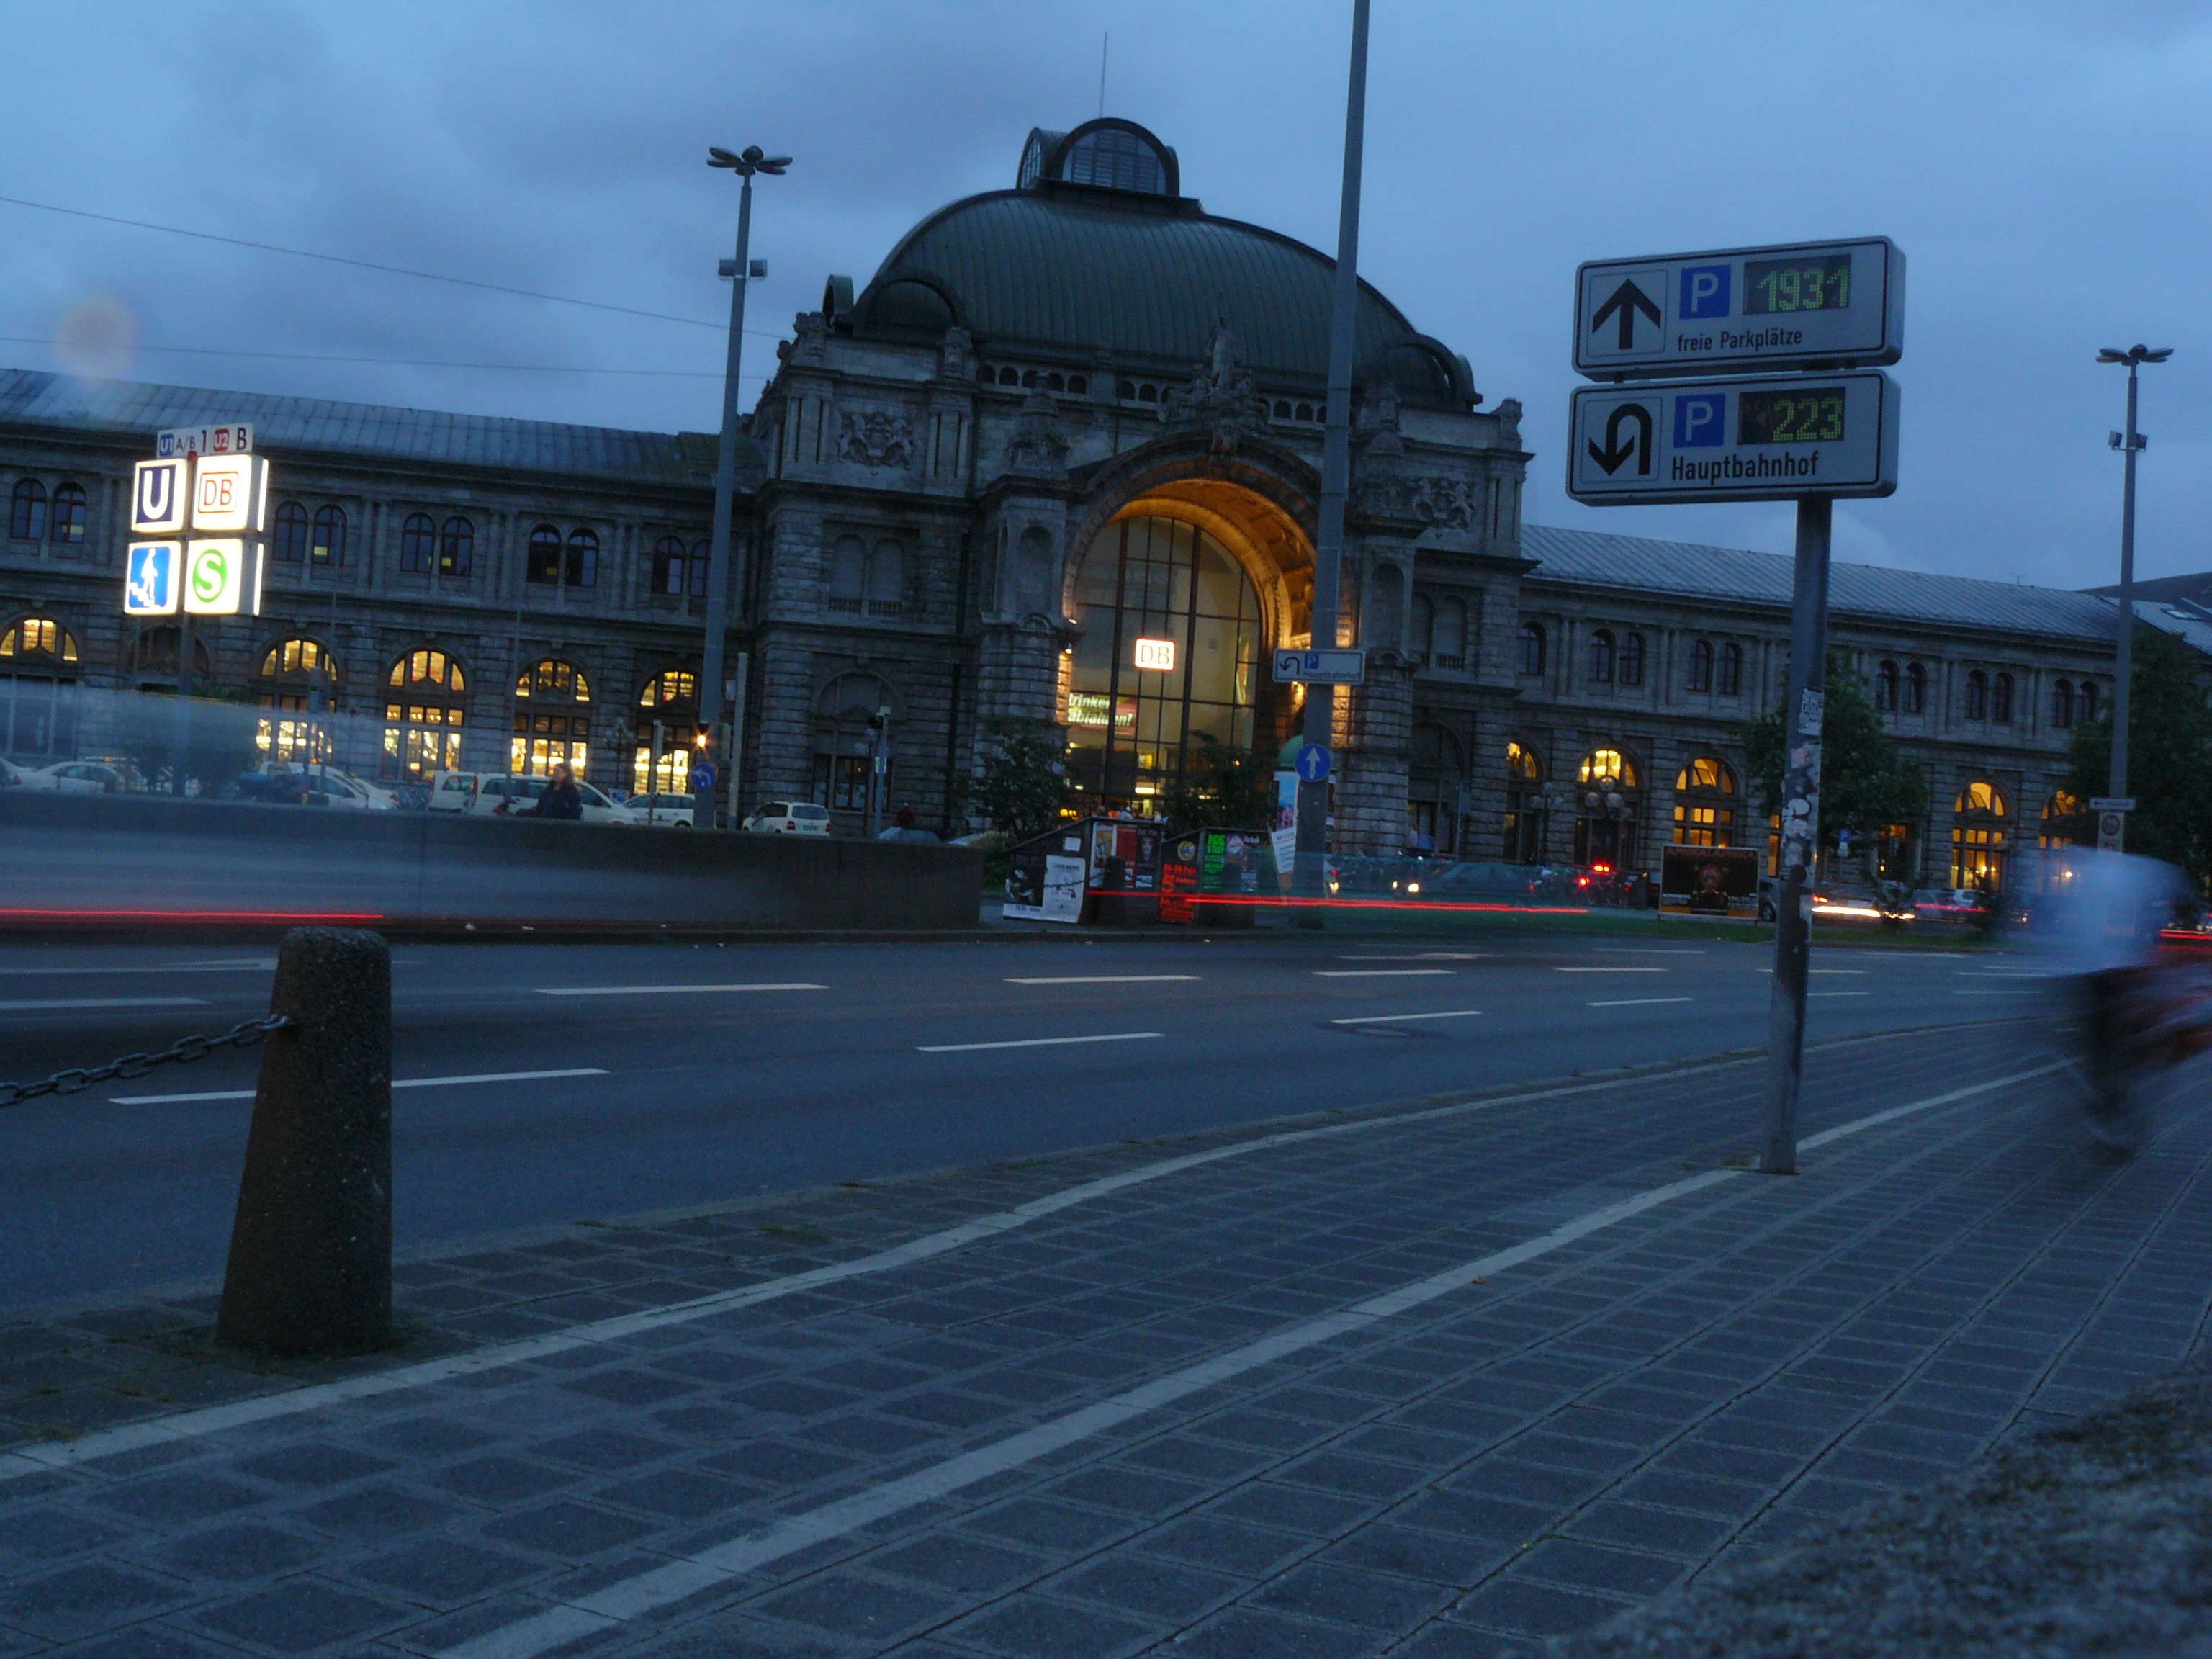 FileNuremberg bahnhof railway station.JPG   Wikimedia Commons